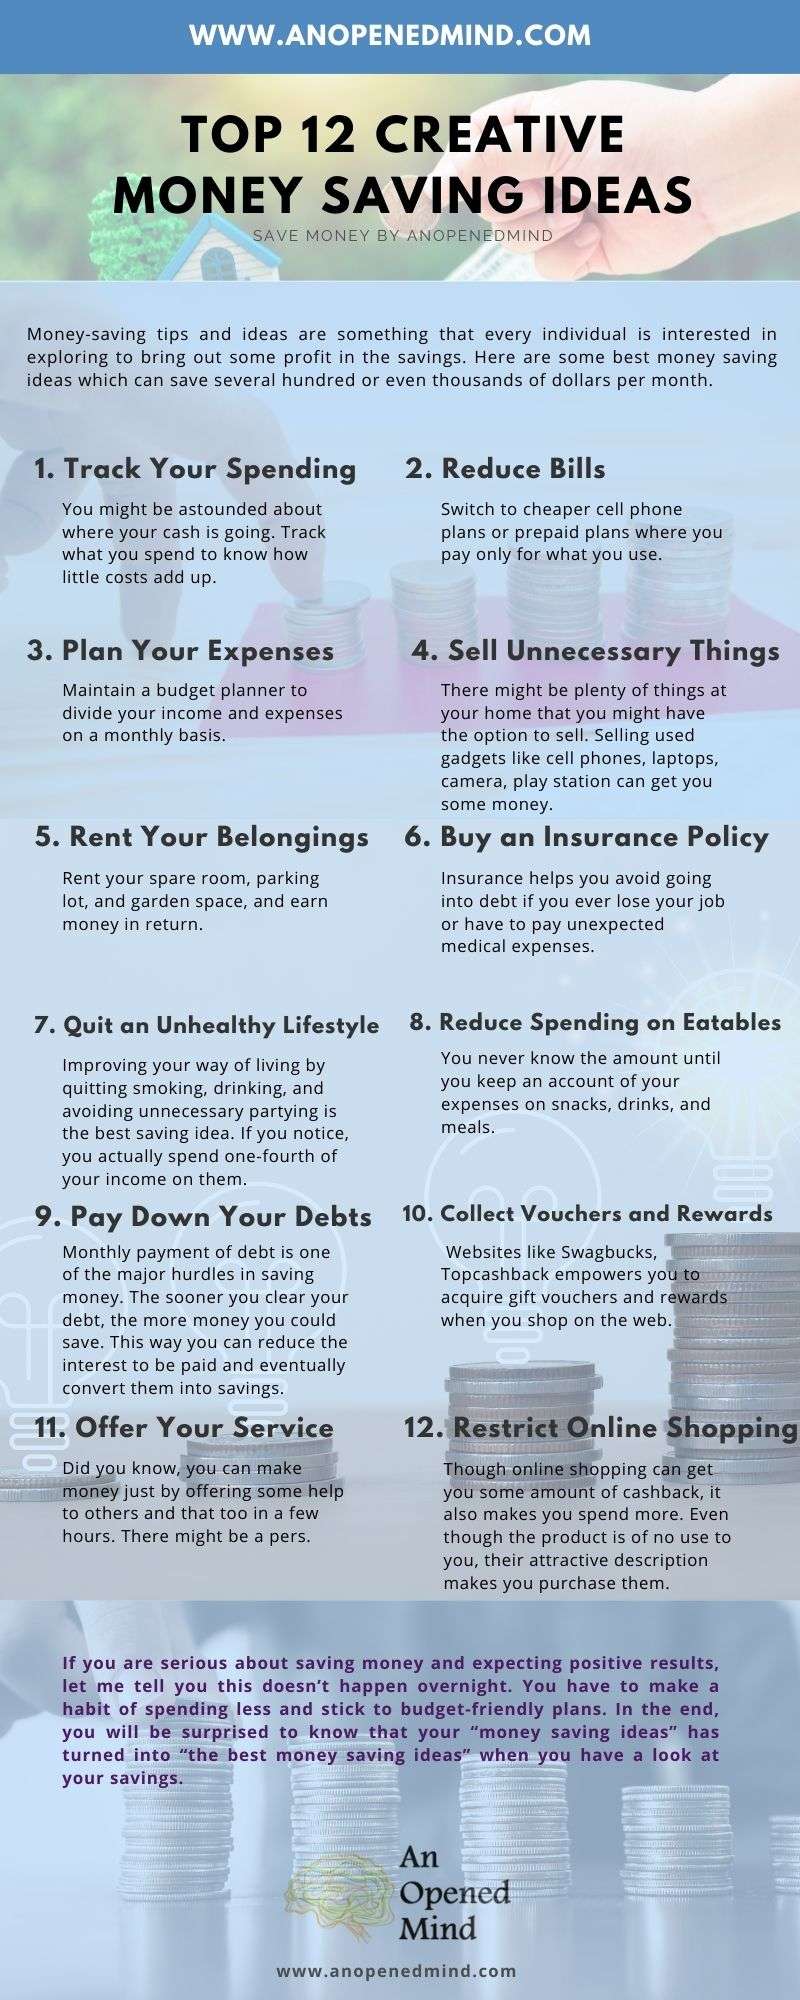 Top 12 Creative Money Saving Ideas